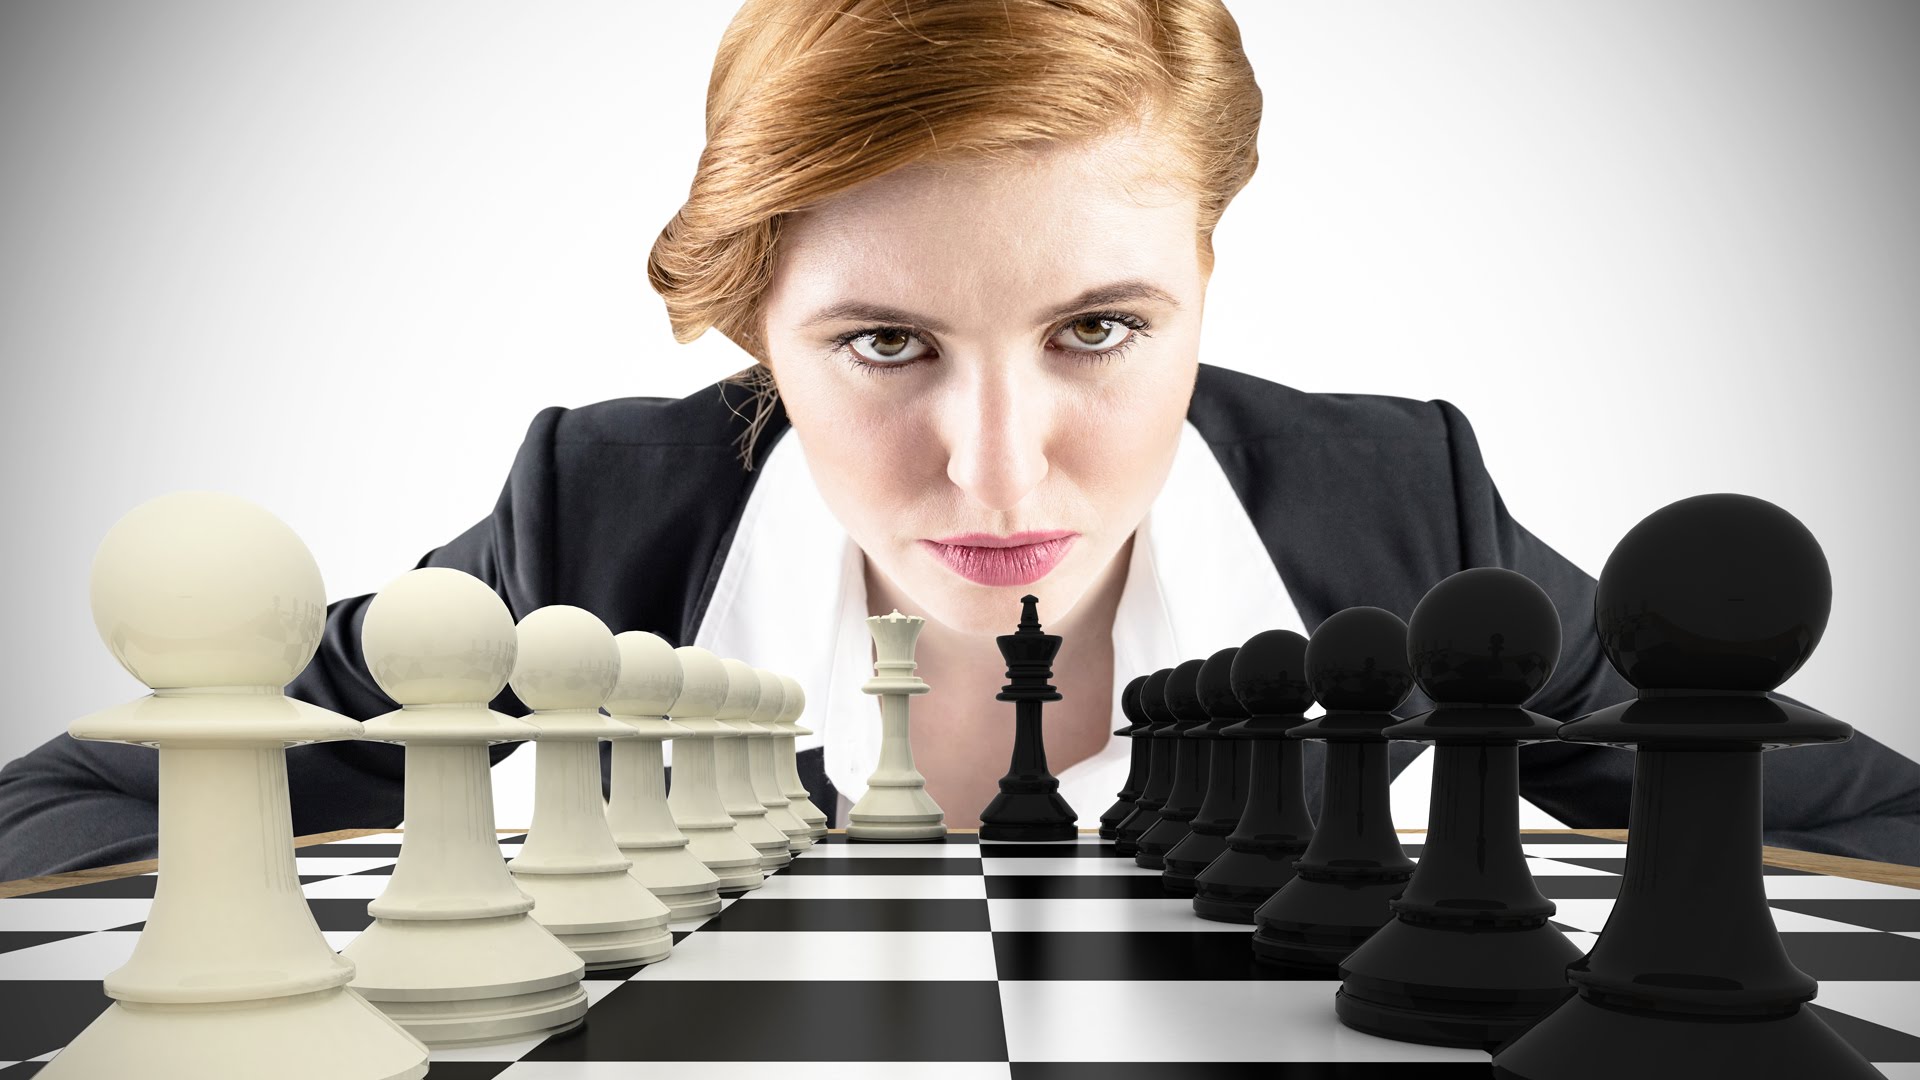 Women in chess. Девушка и шахматы. Люди на шахматной доске. Человек за шахматной доской. Женщина на шахматной доске.